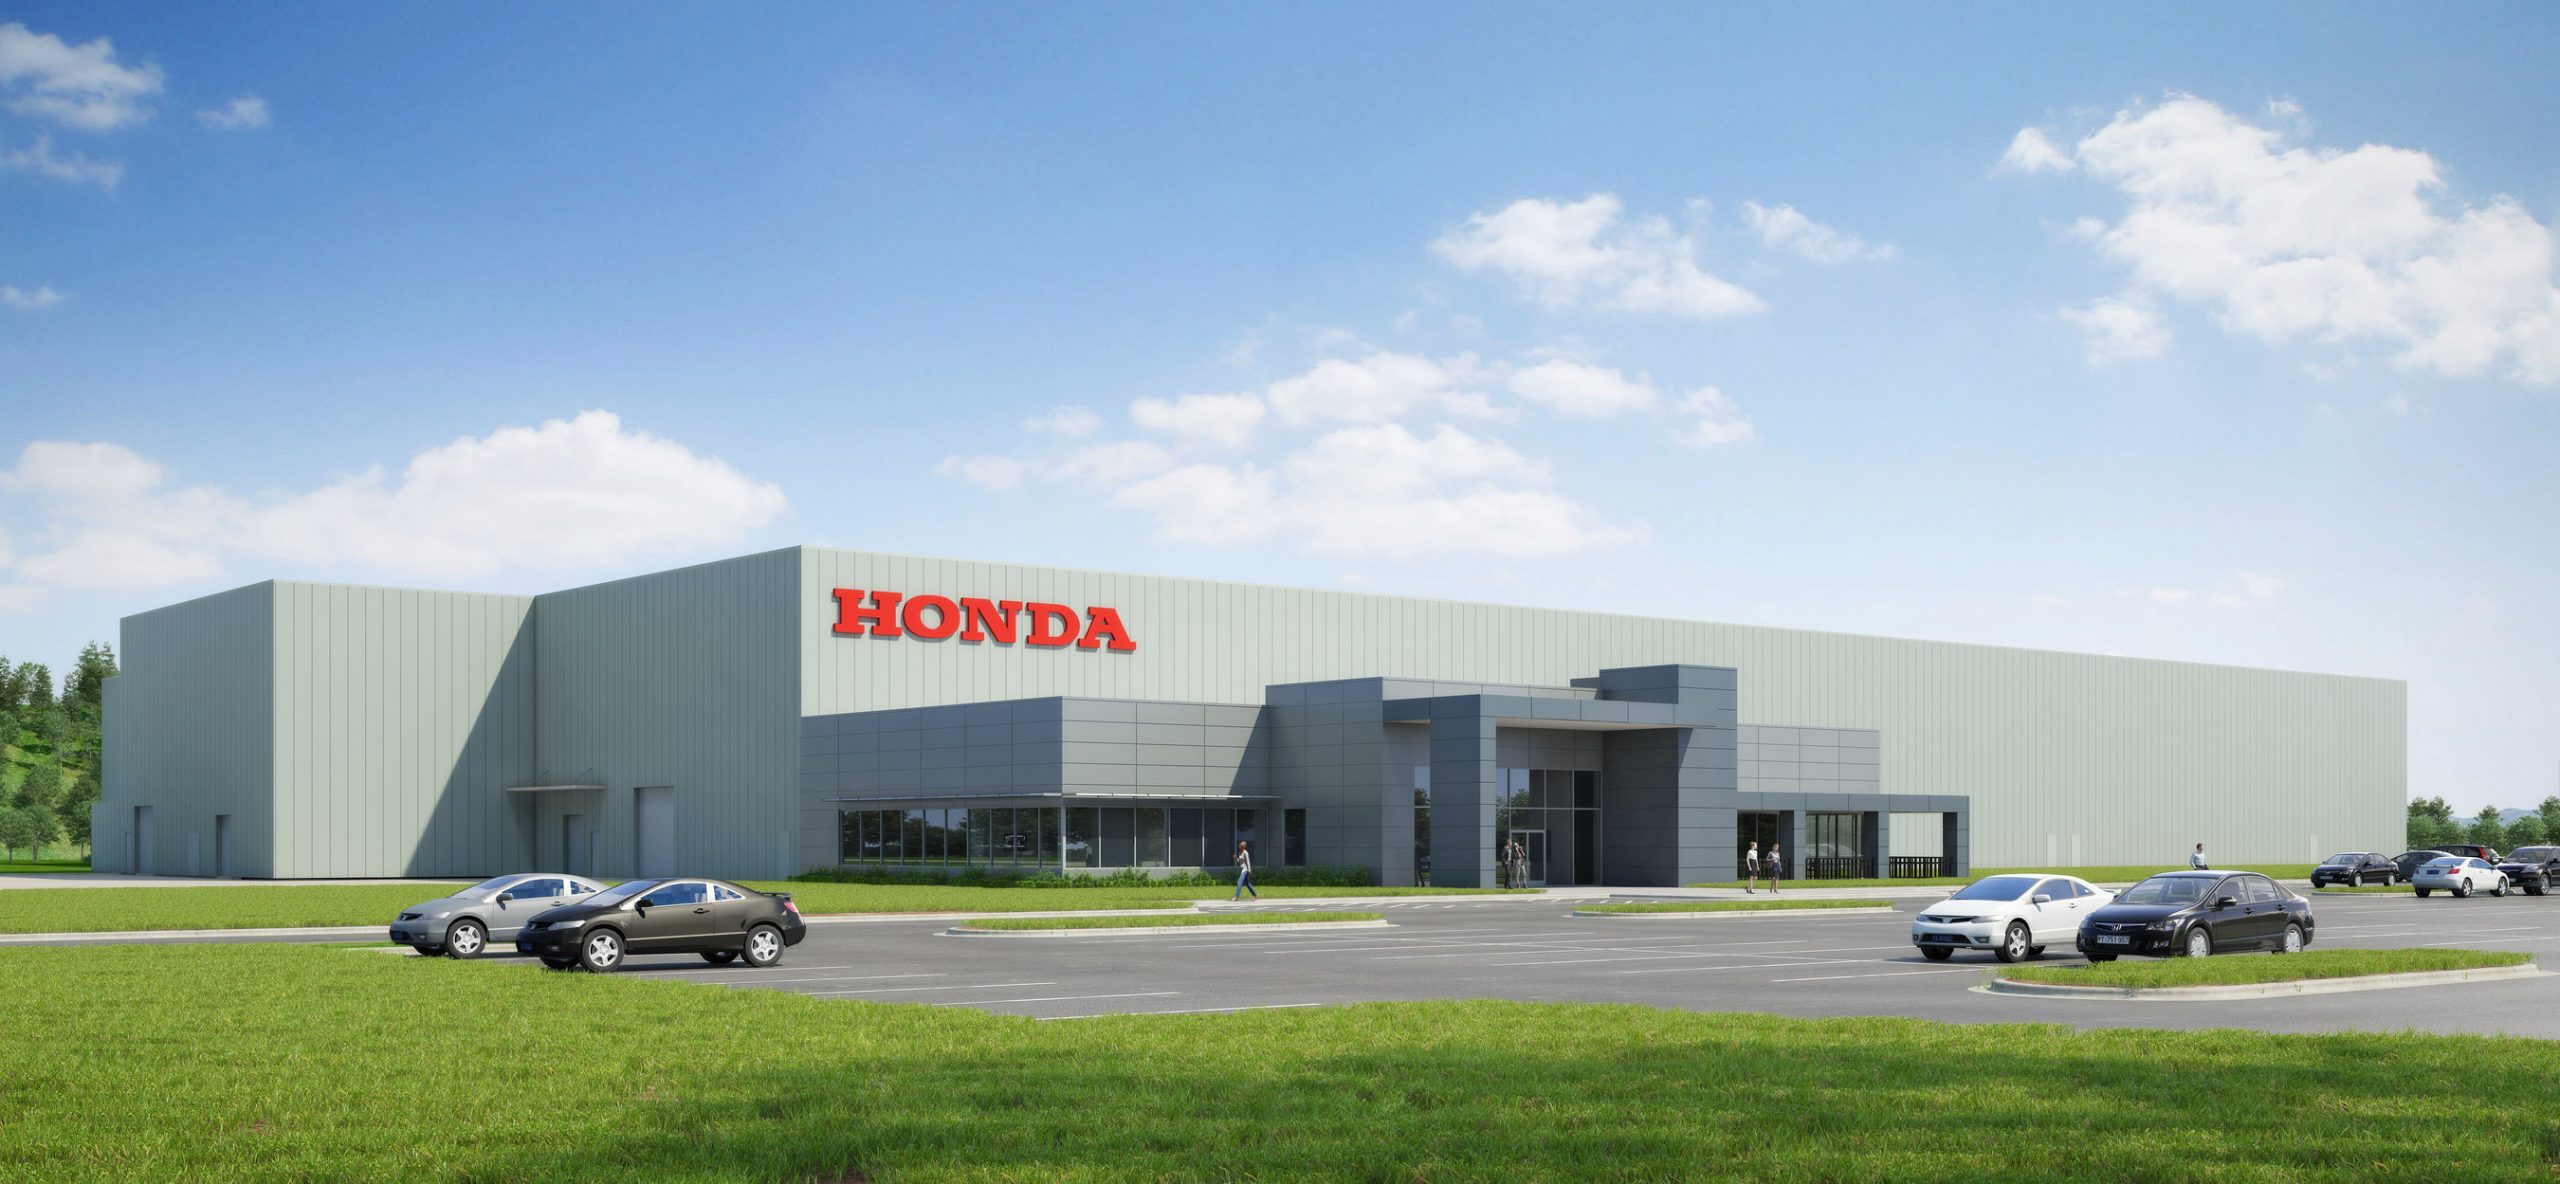 Honda Aircraft Company investing $15.5 million to expand HQ